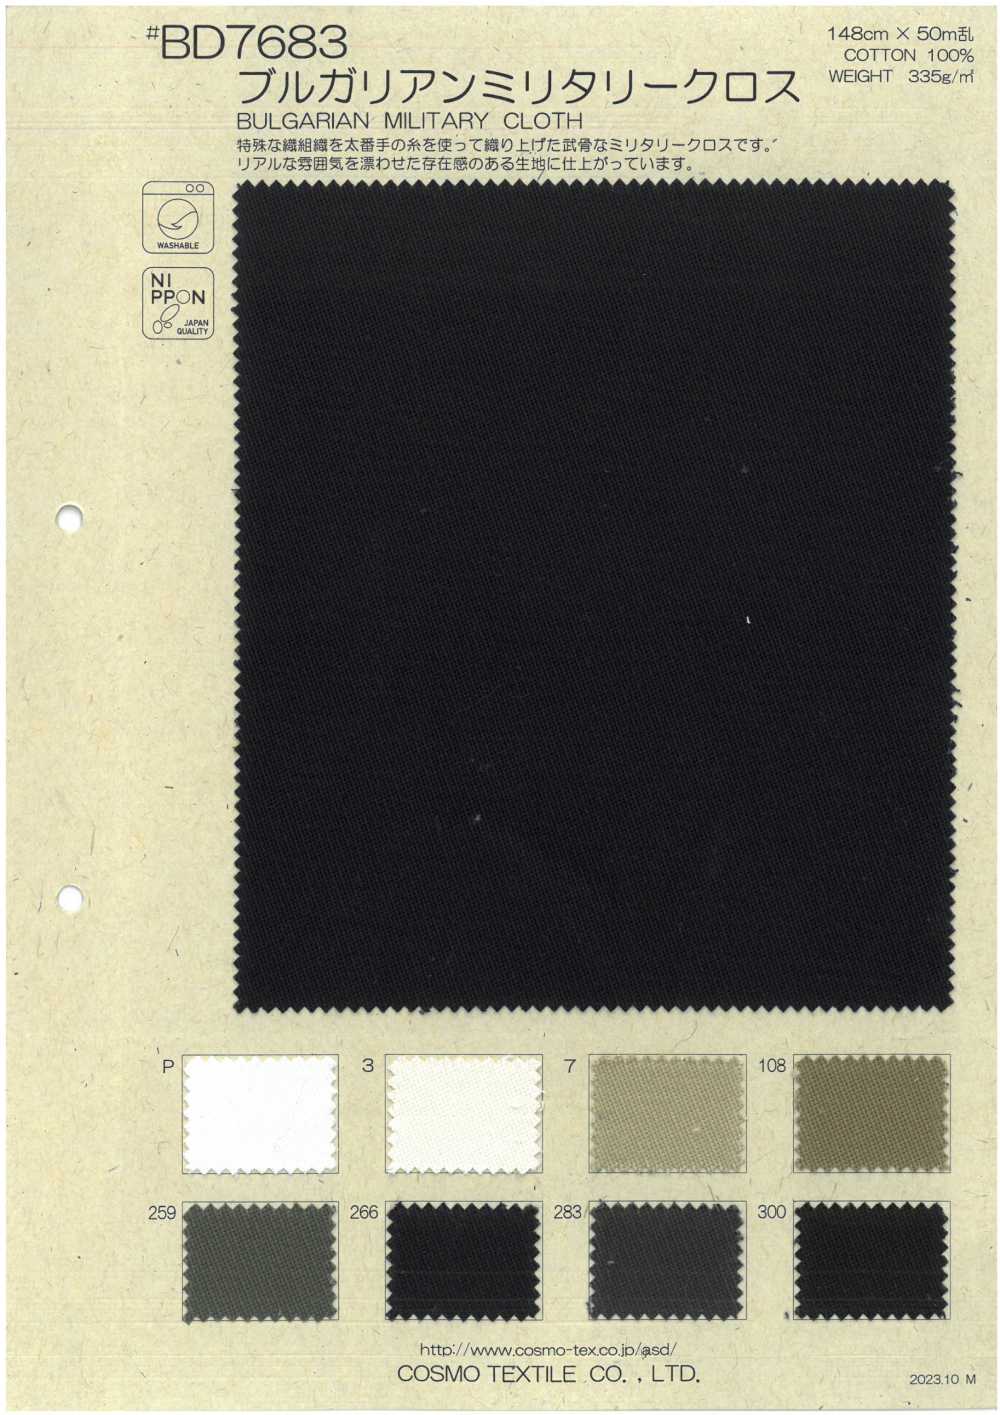 BD7683 Bulgarian Military Cross[Textile / Fabric] COSMO TEXTILE